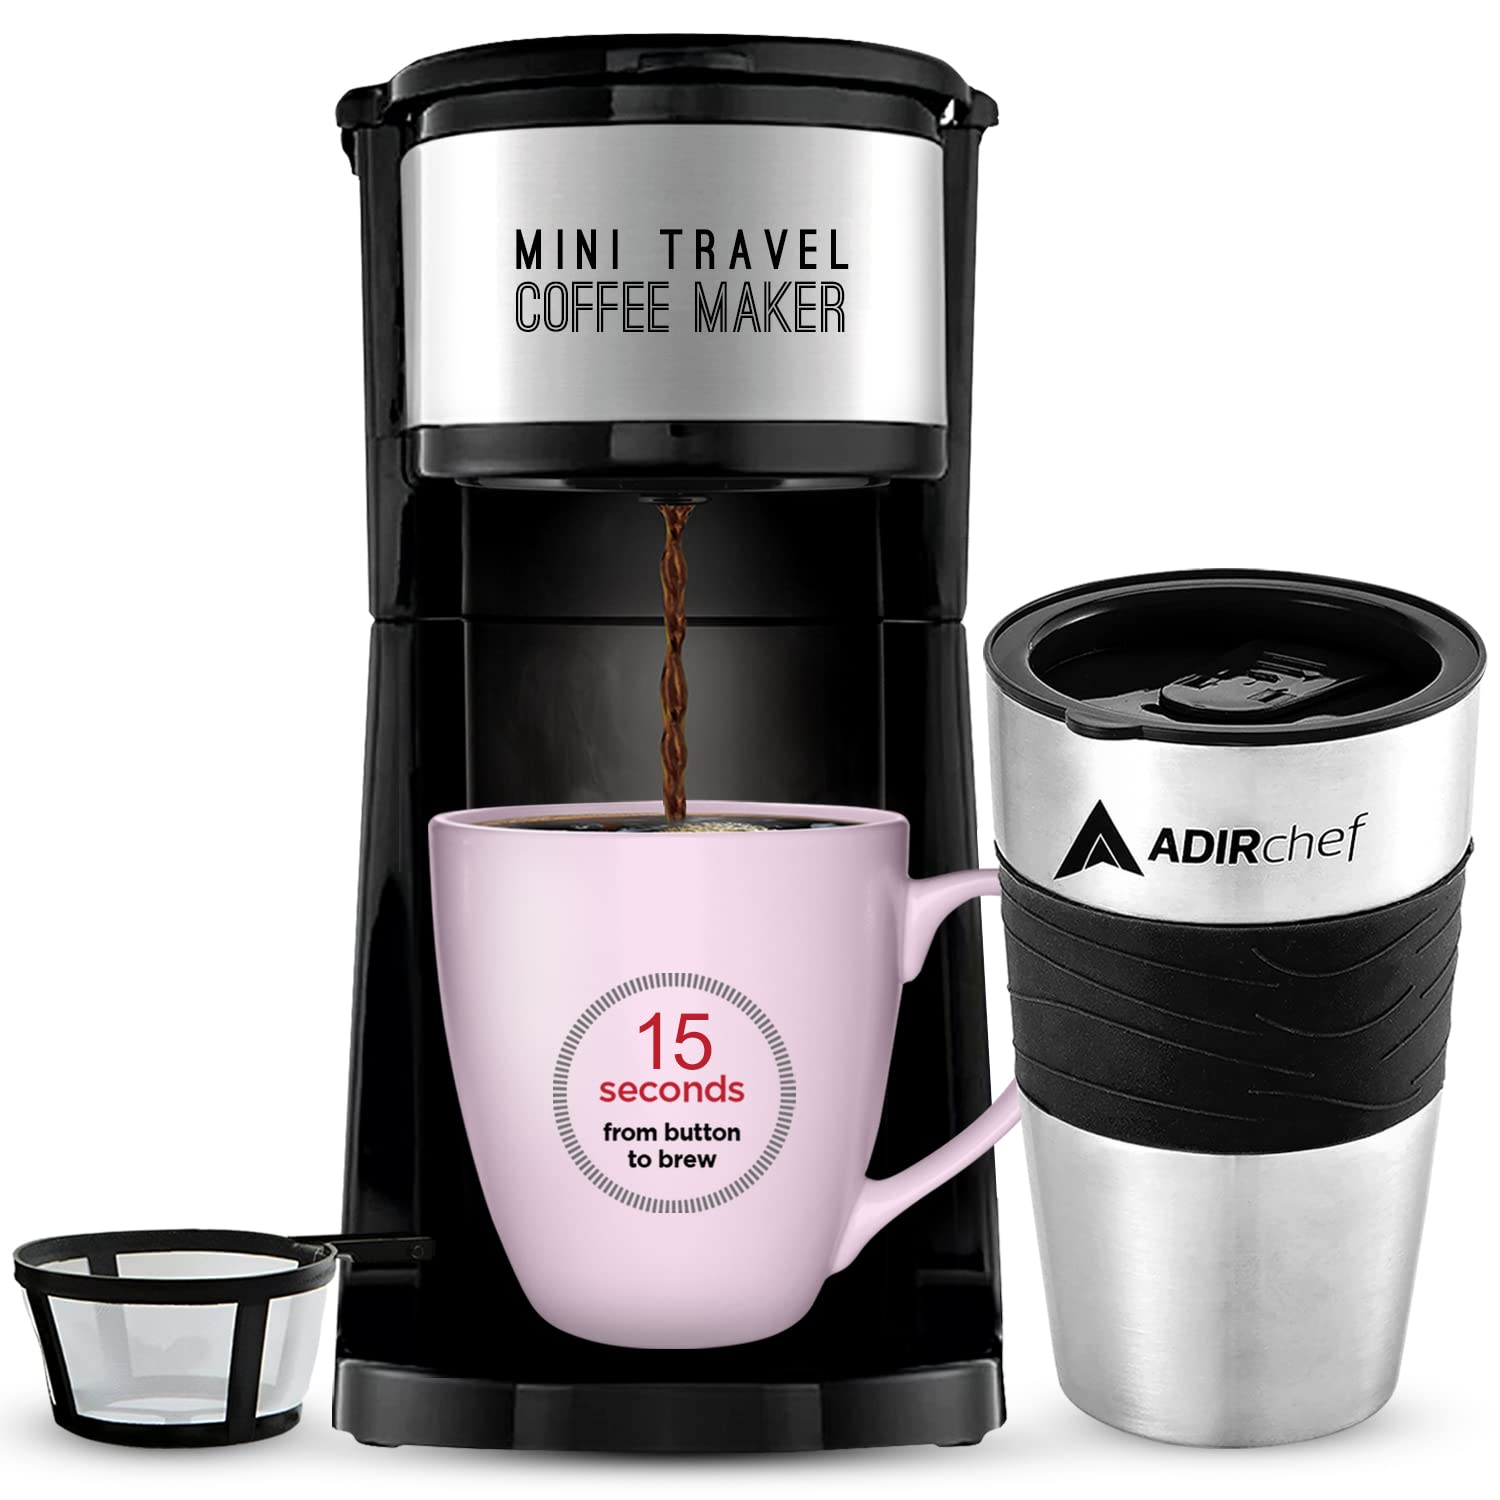 AdirChef Mini Travel Coffee Maker